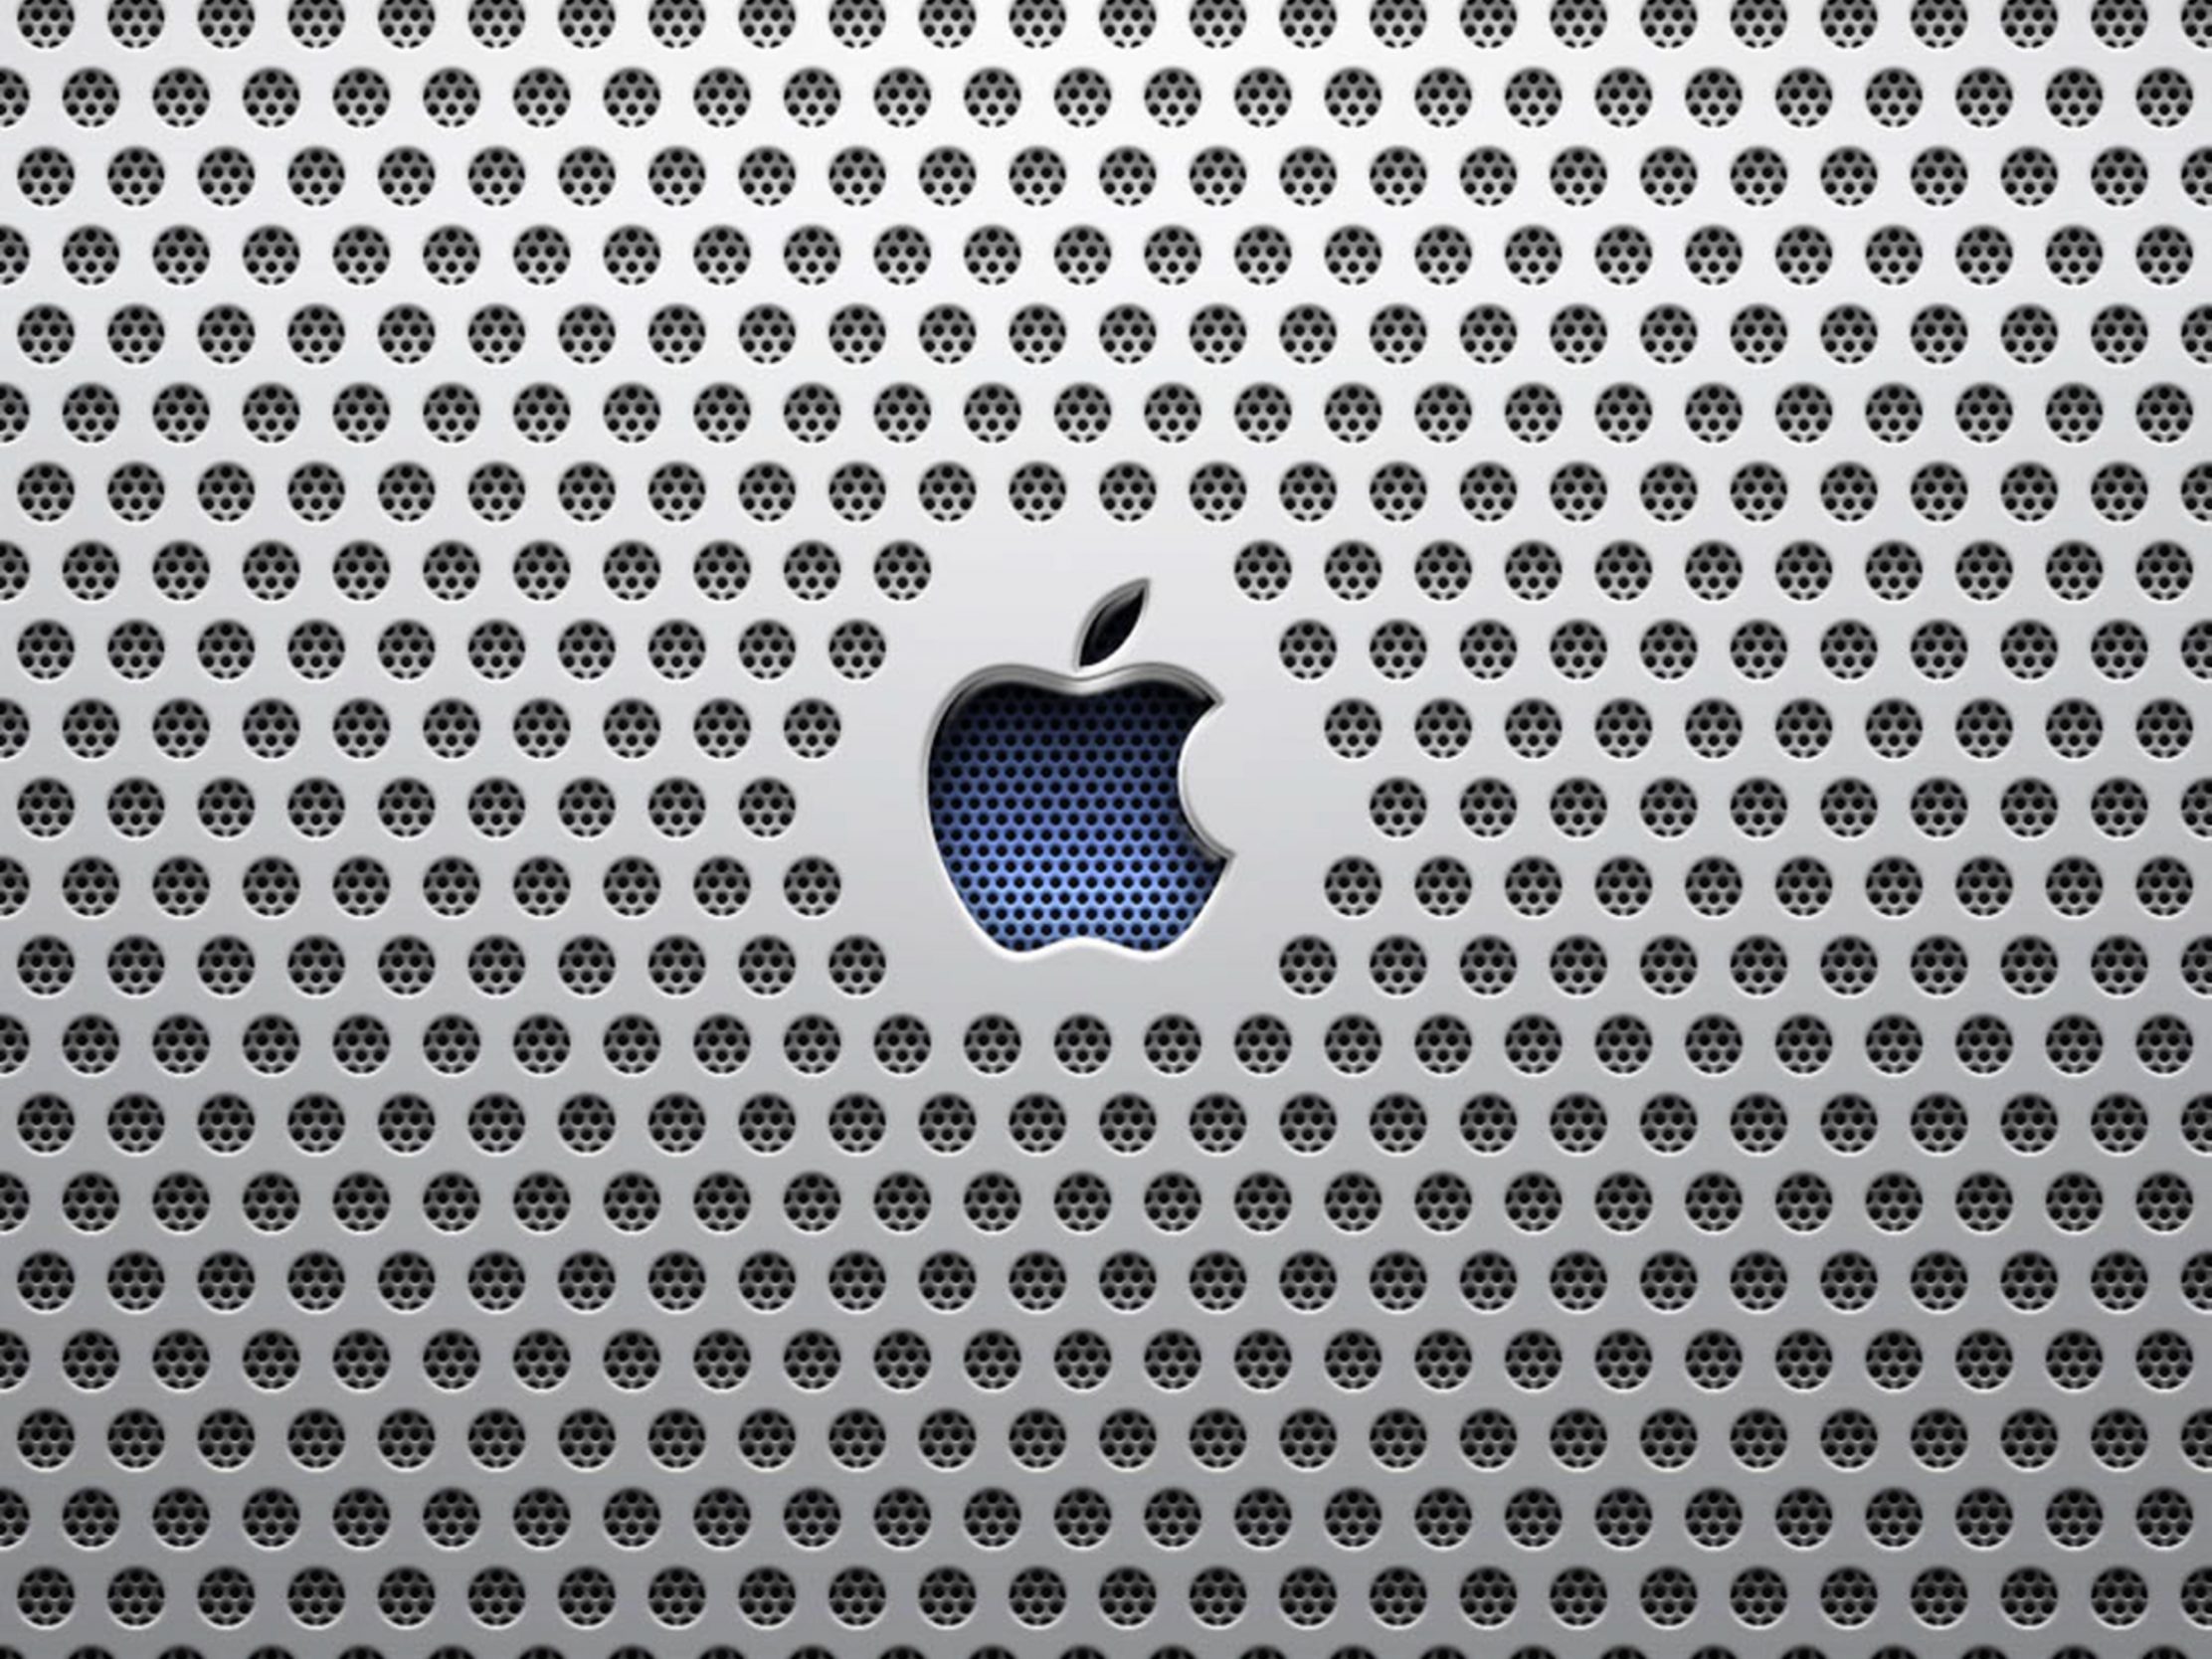 2224x1668 iPad Pro wallpapers Apple Industrial Ipad Wallpaper 2224x1668 pixels resolution